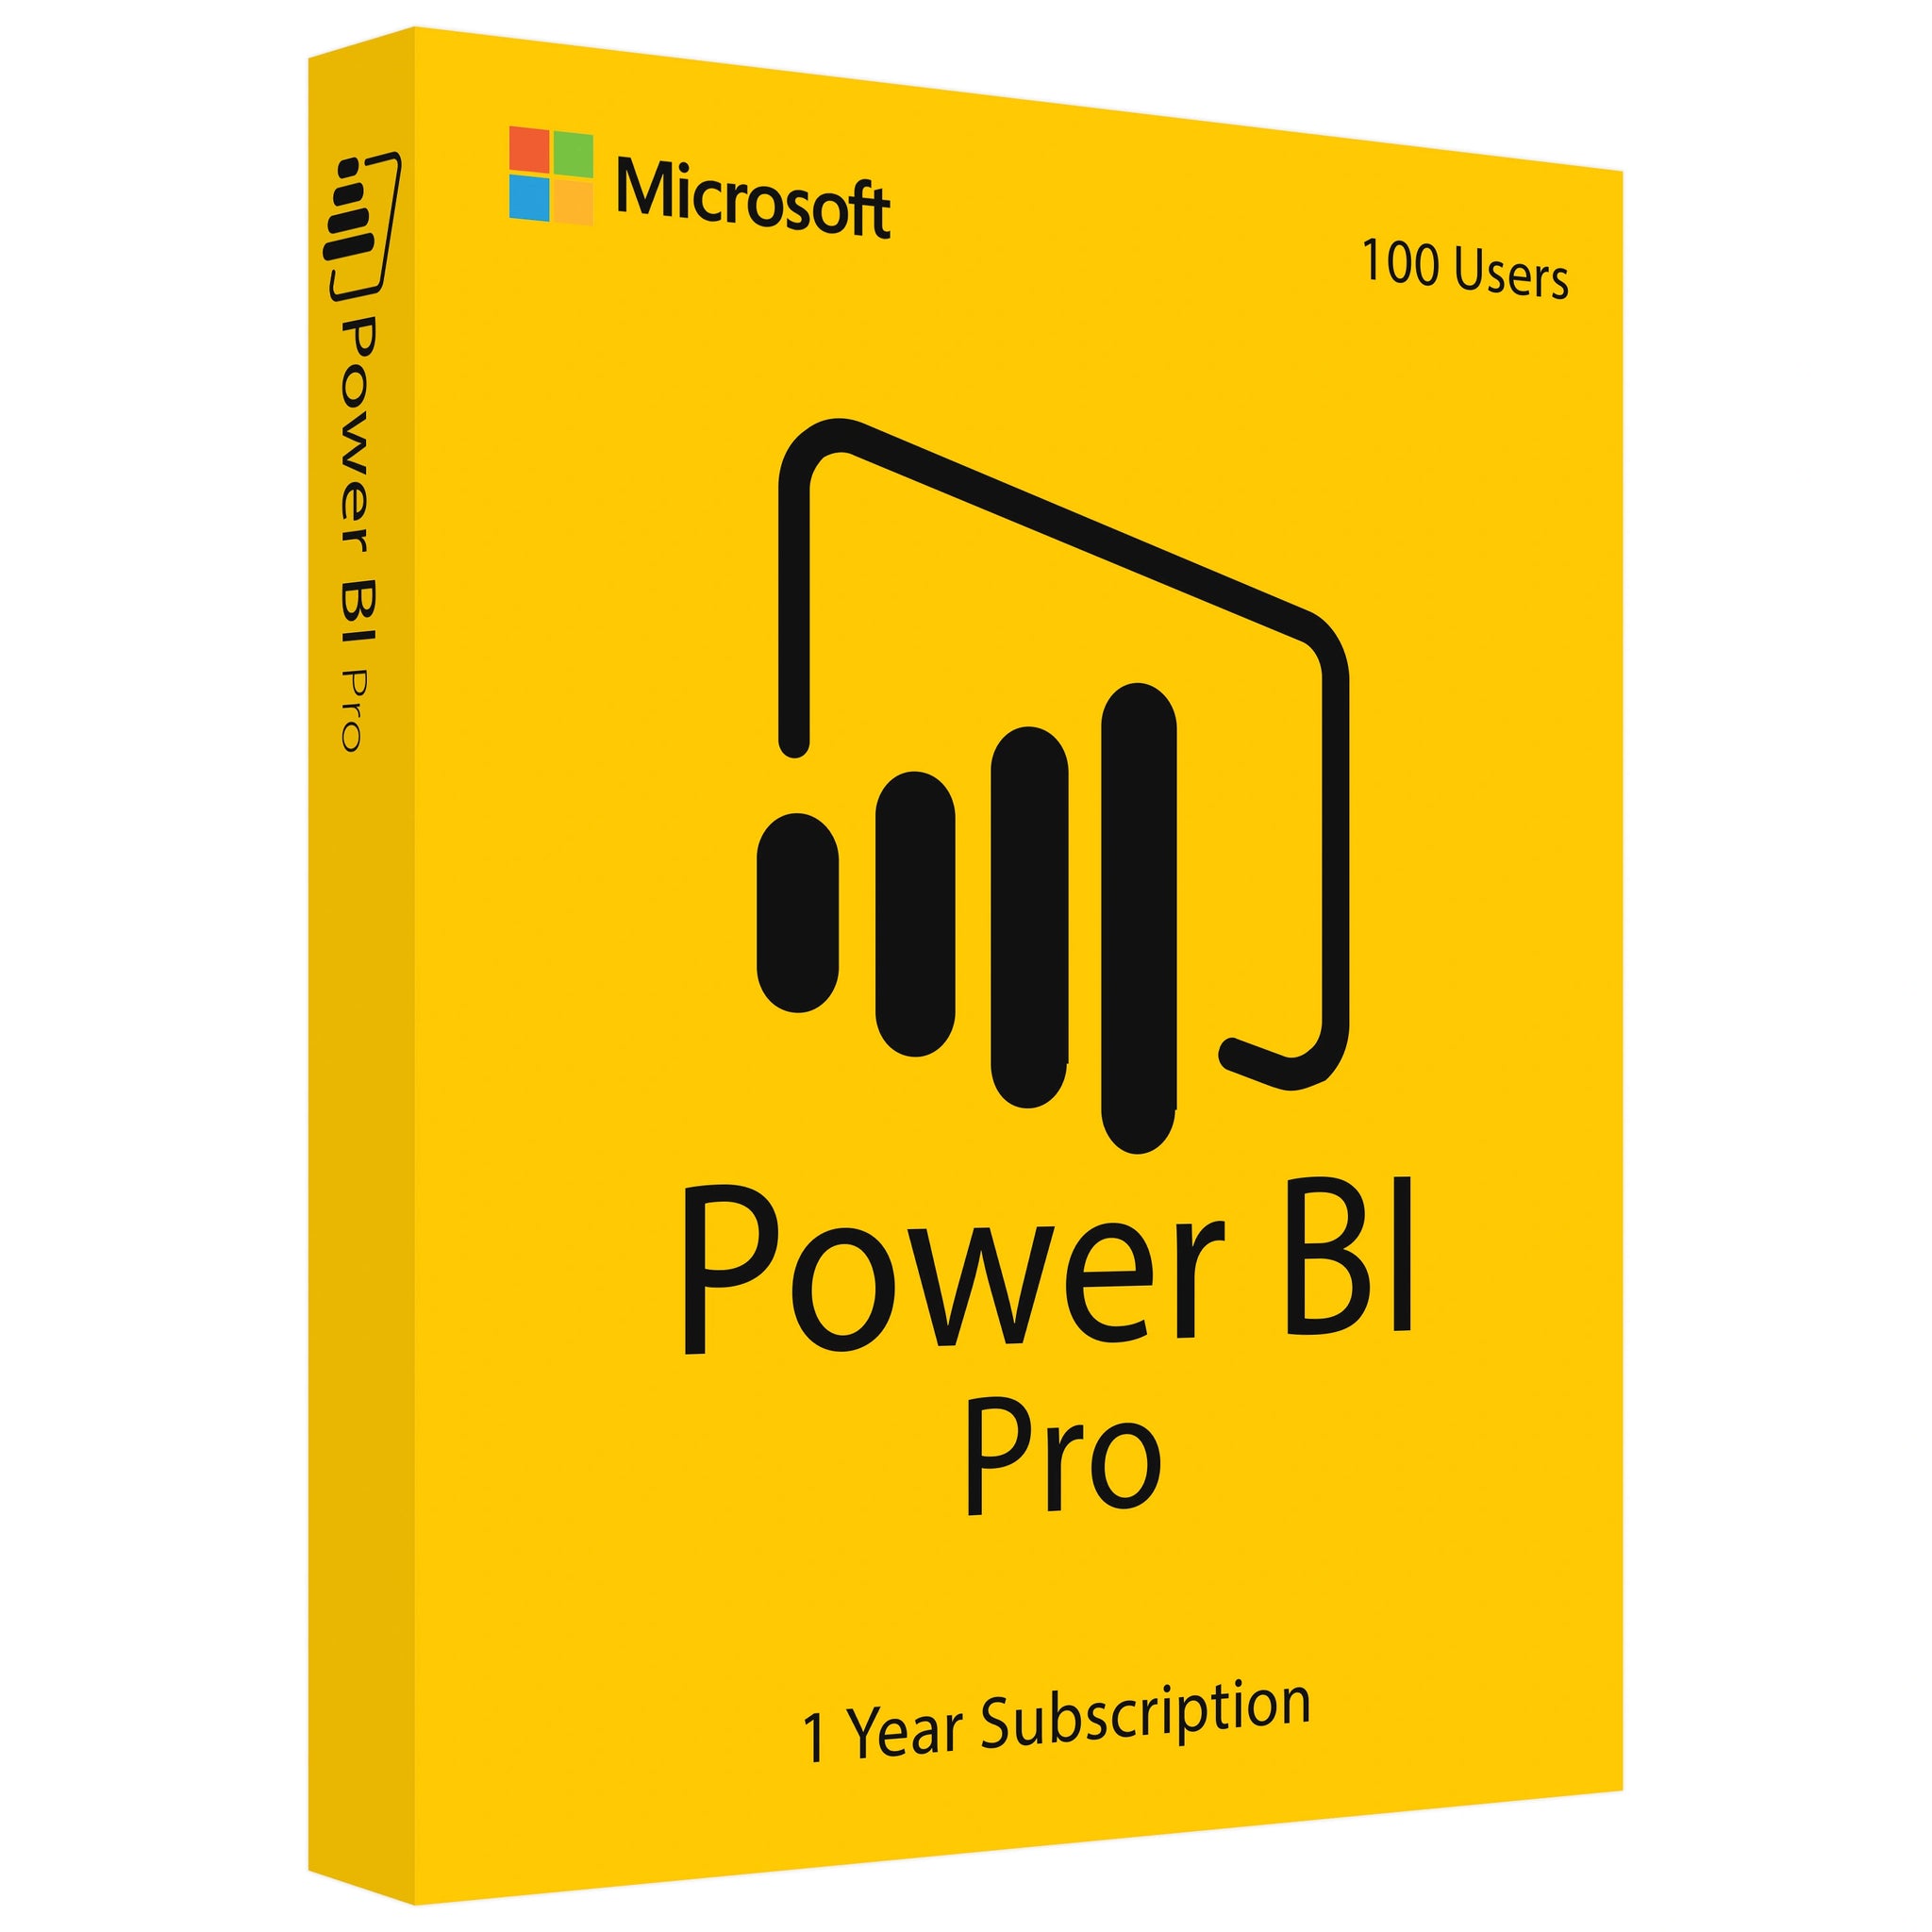 Microsoft Power BI Pro License Key – 1 Year Subscription valid for 100 User